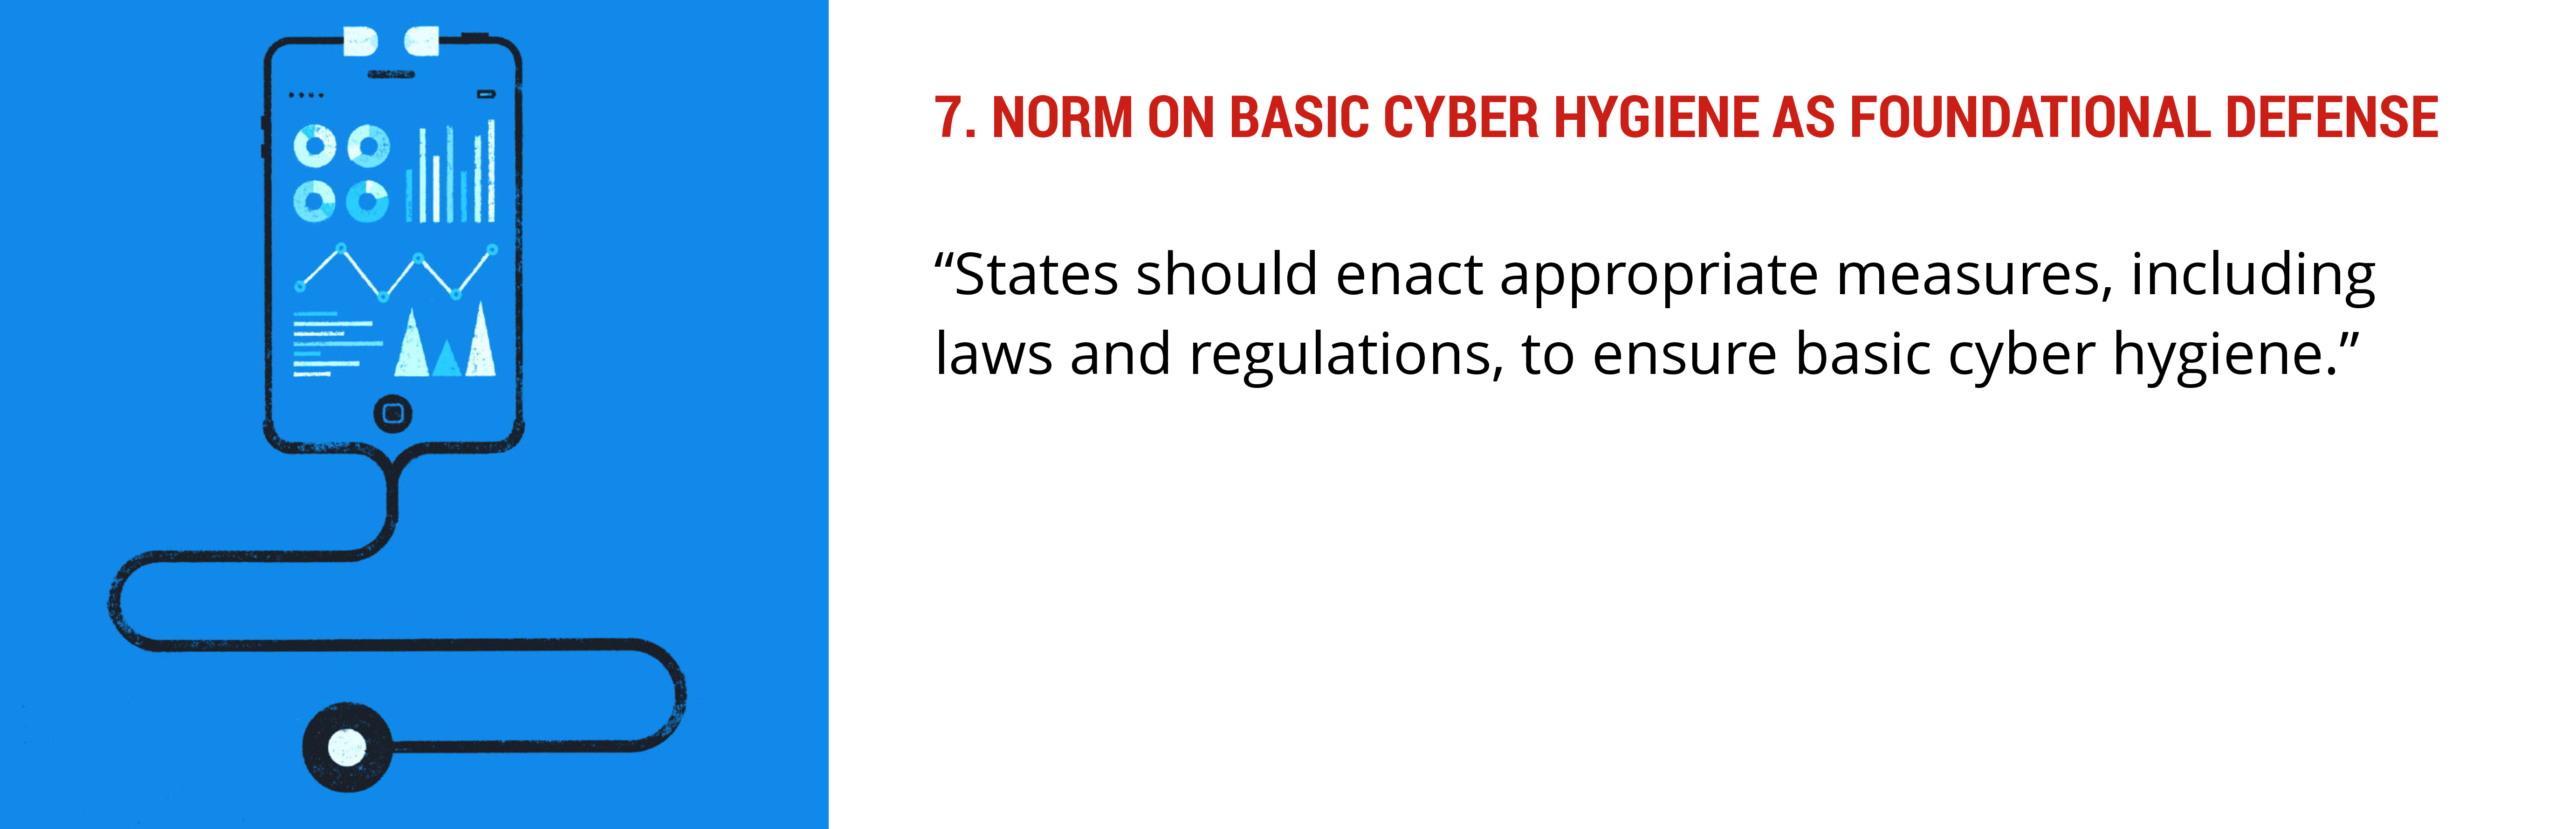 Norm on Basic Cyber Hygiene as Foundational Defense 